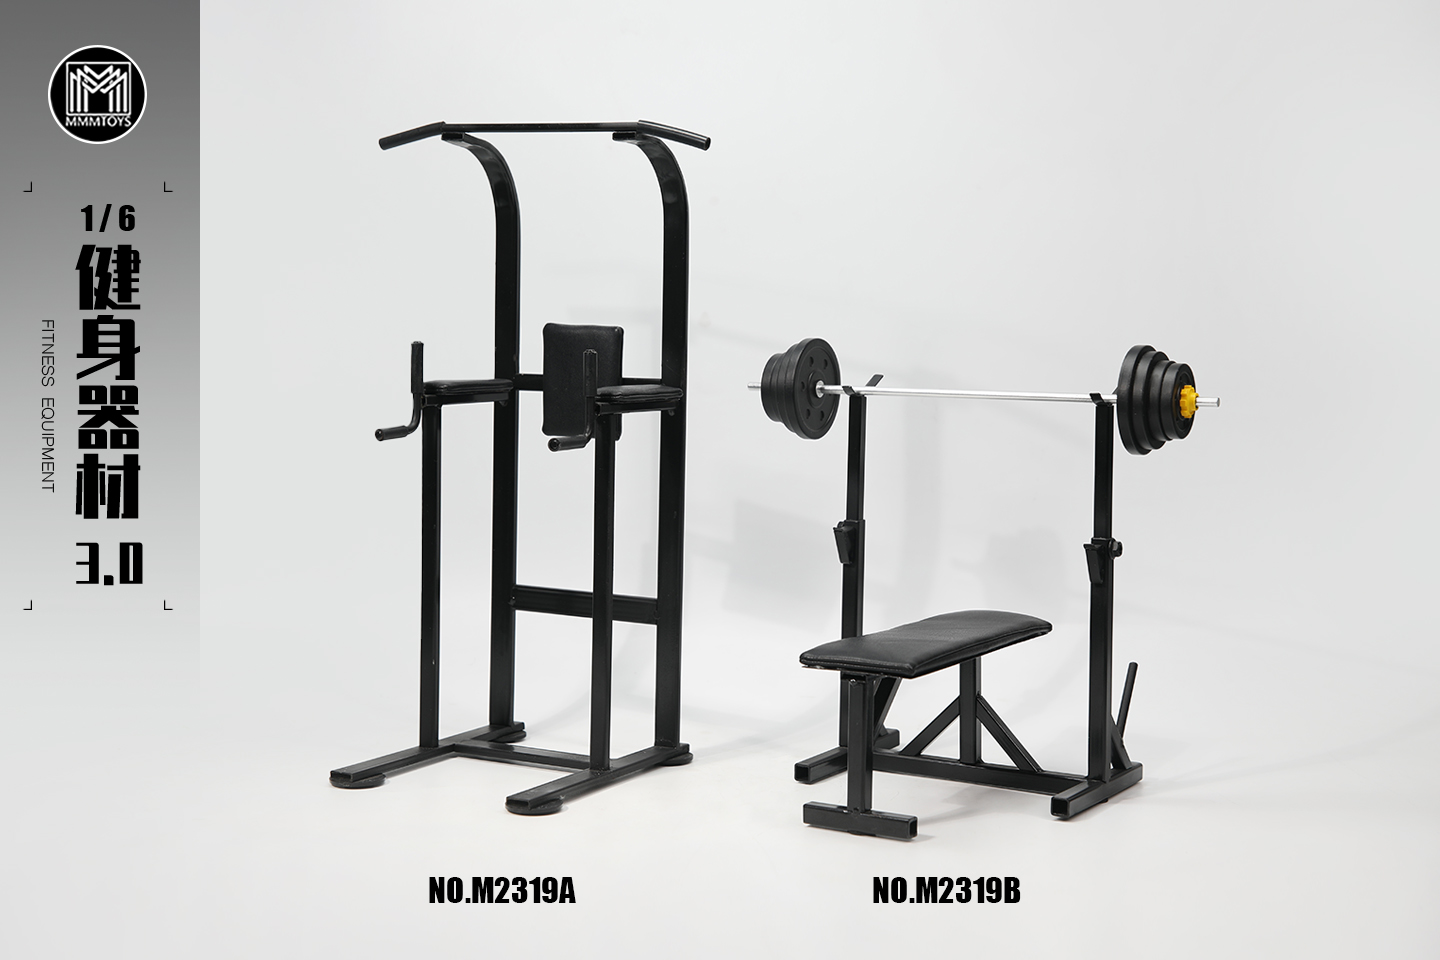 Fitness Equipment 3.0 - Set B